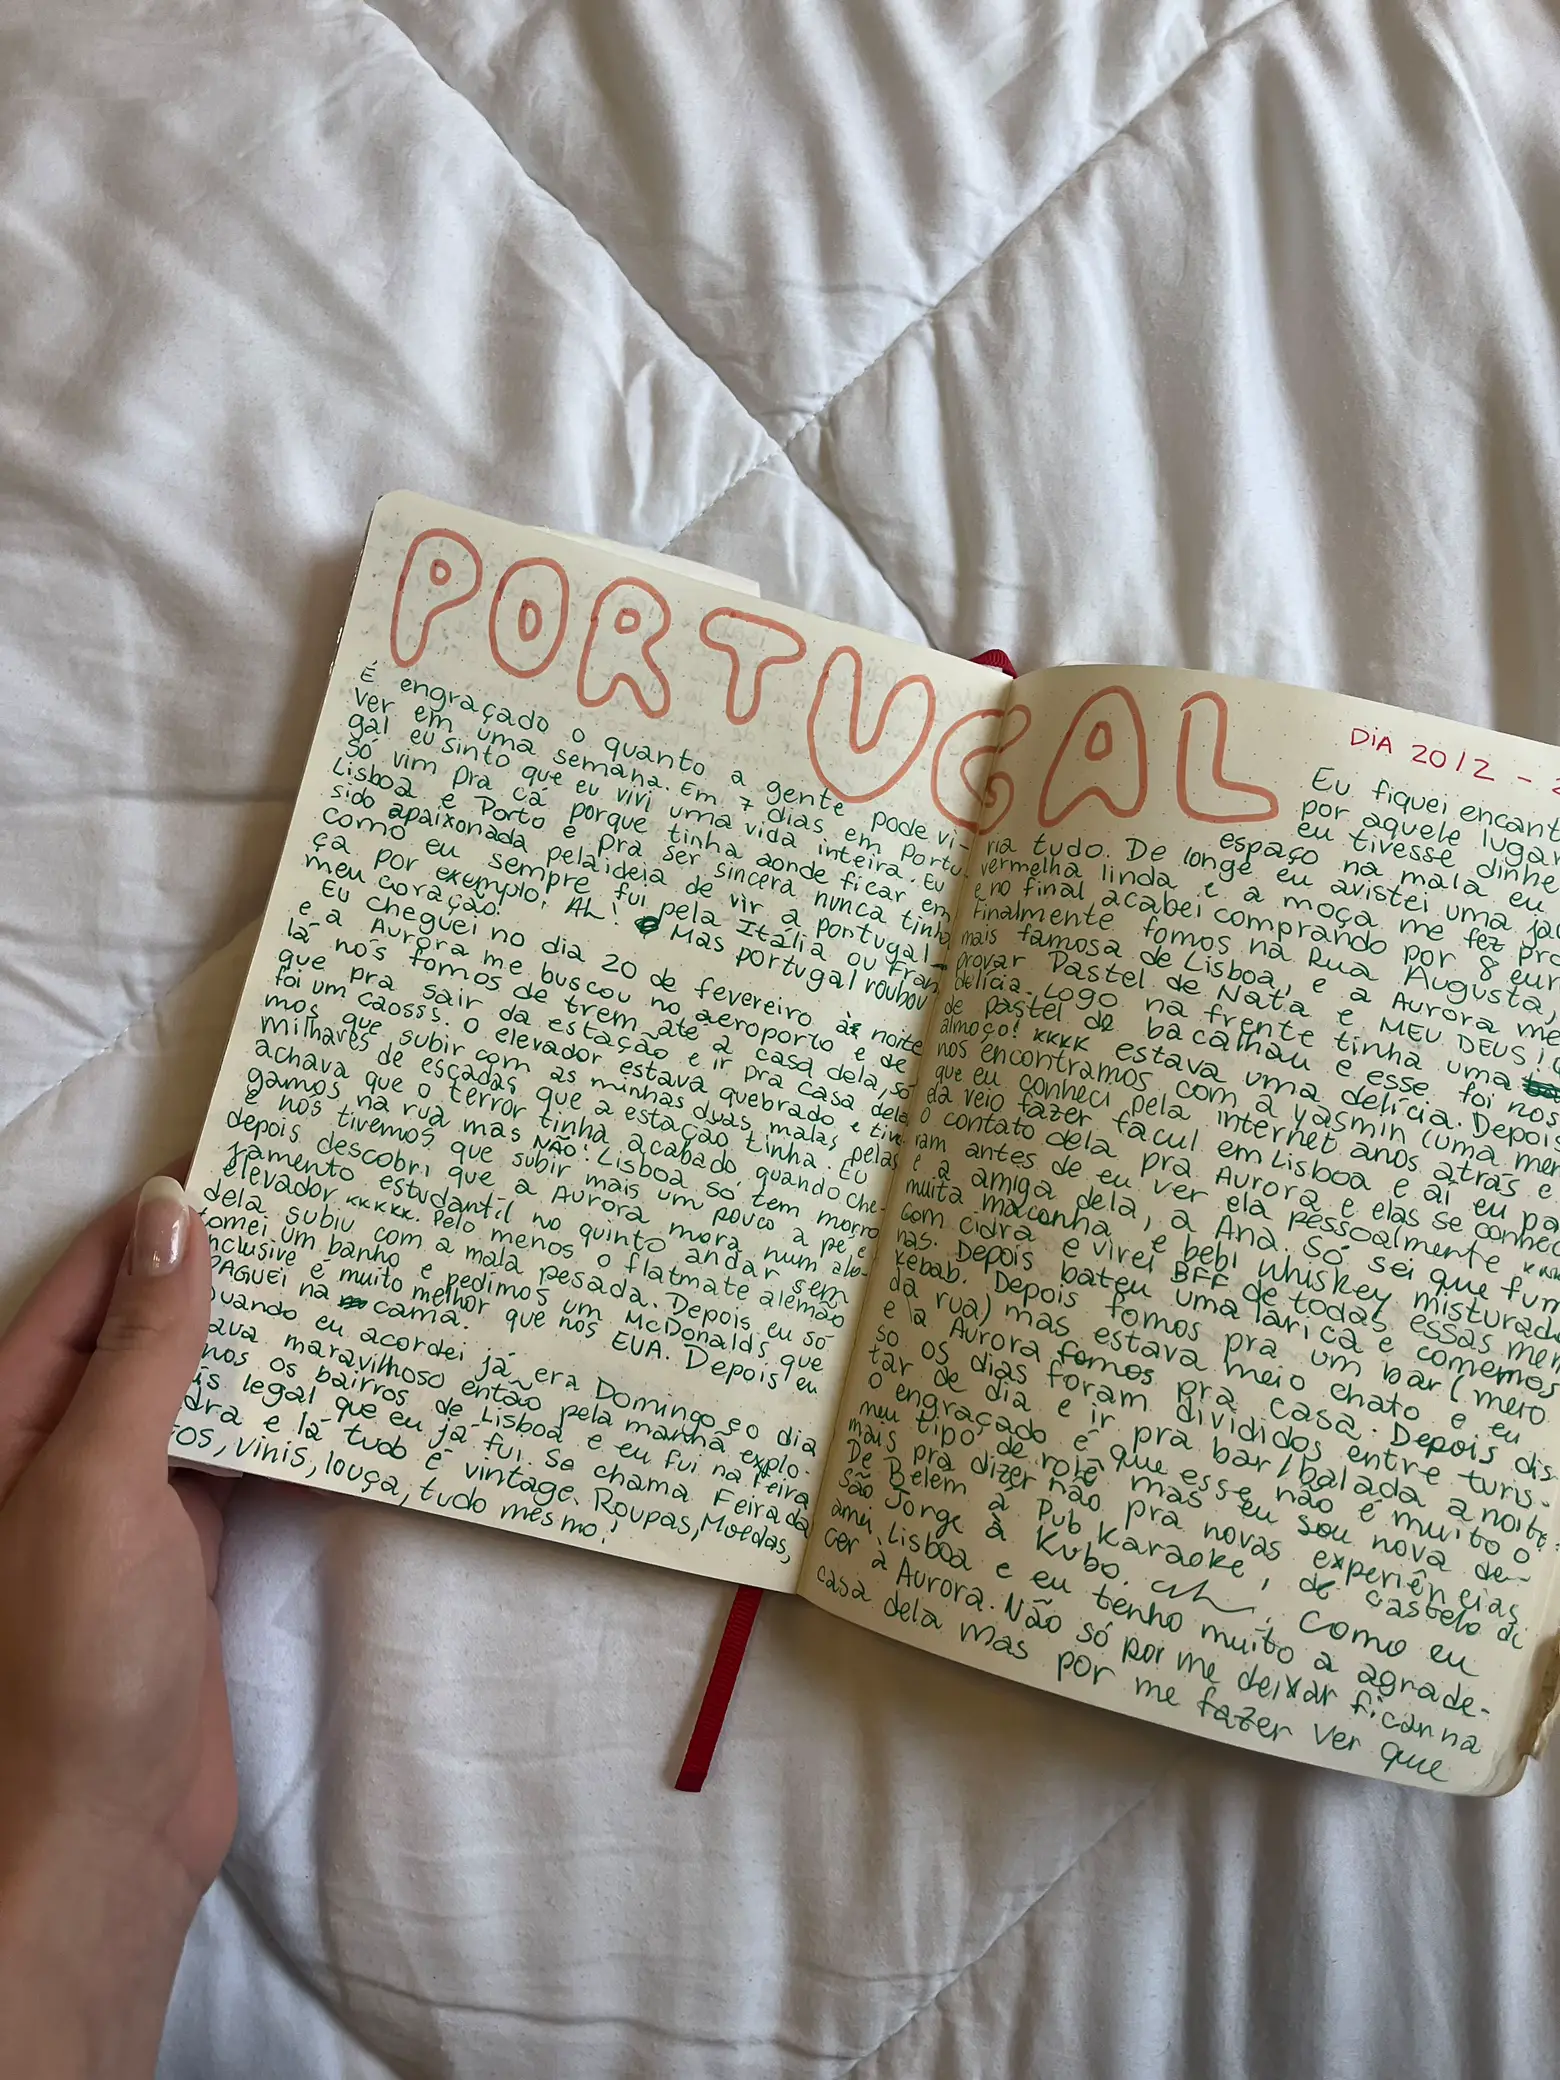 30 fun travel journal layouts 💜 Plan an organized and memorable trip 